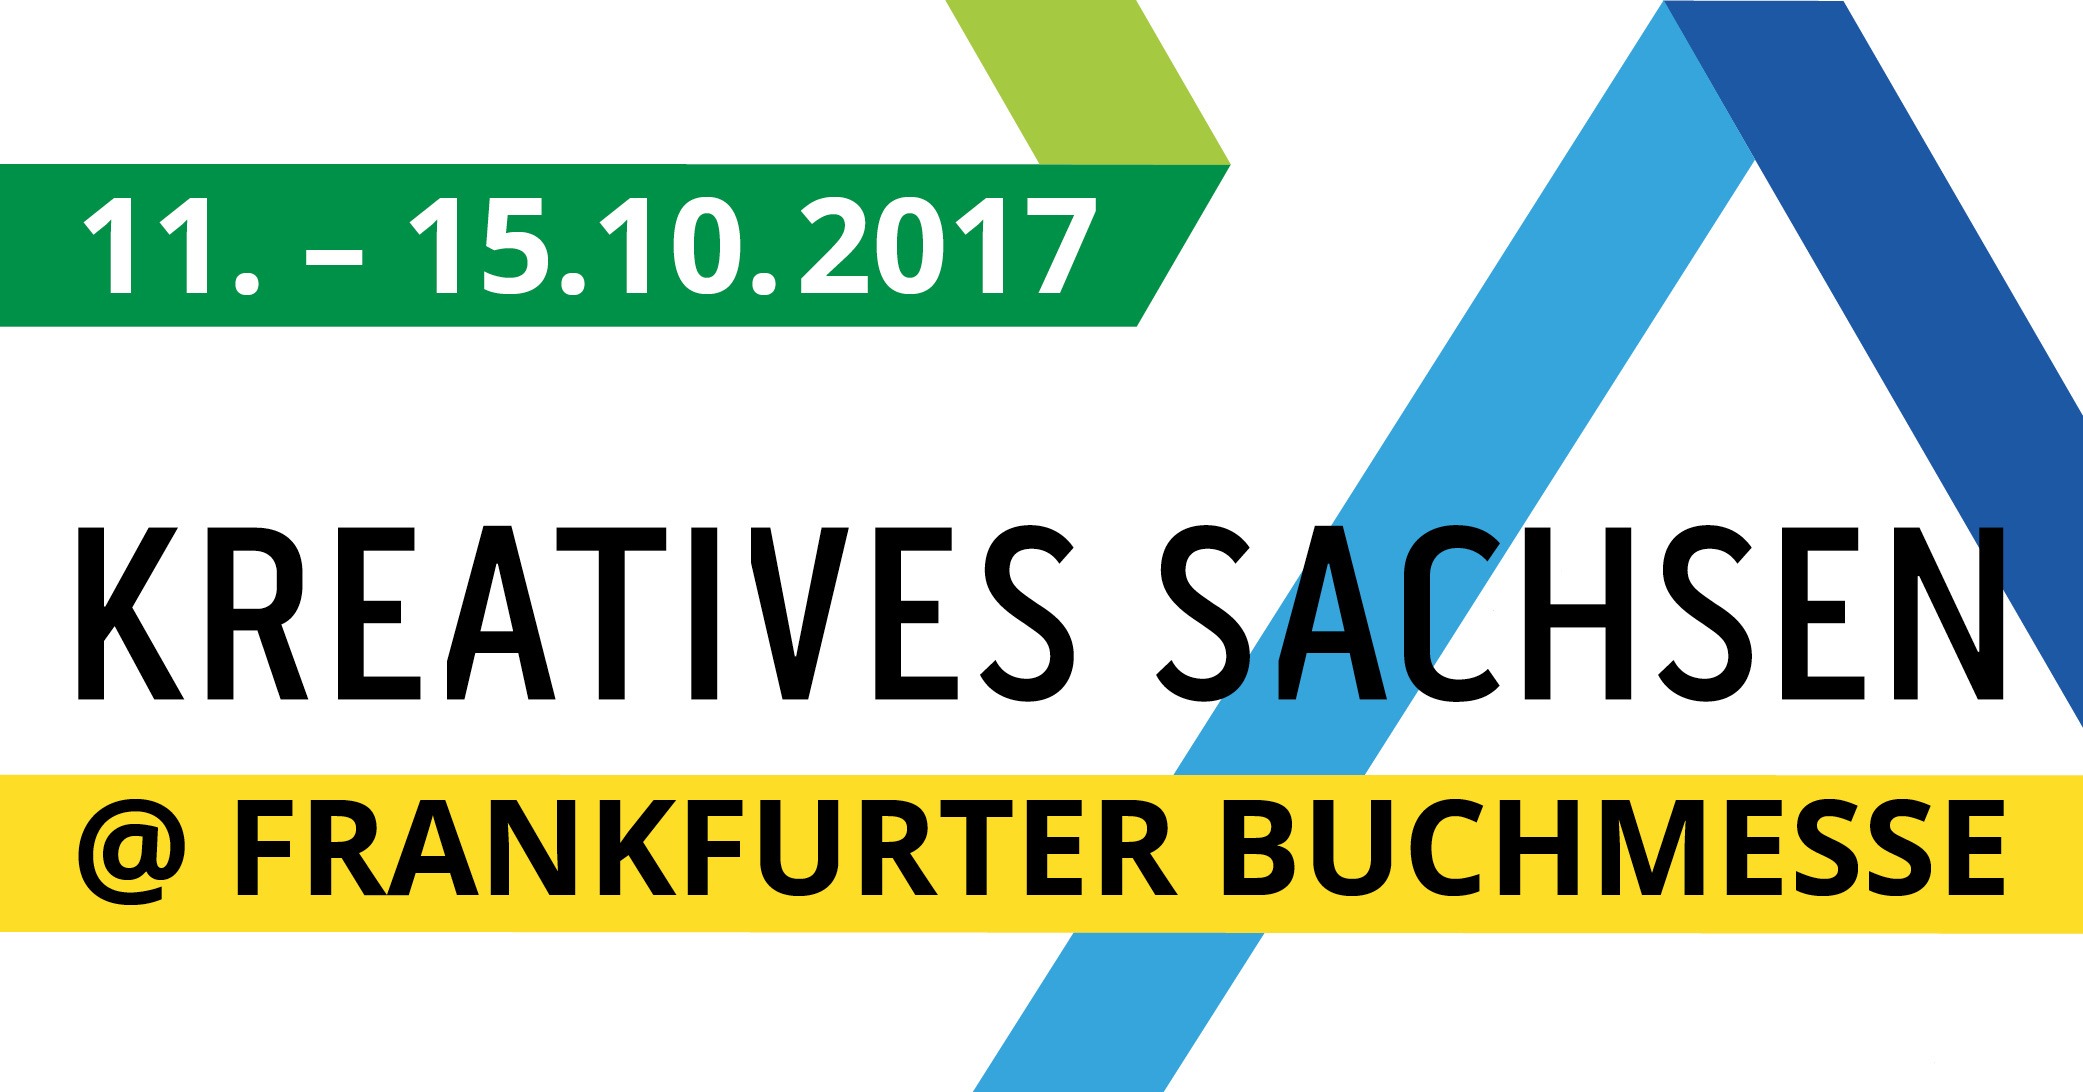 Kreatives Sachsen Buchmesse Frankfurt am Main 2017